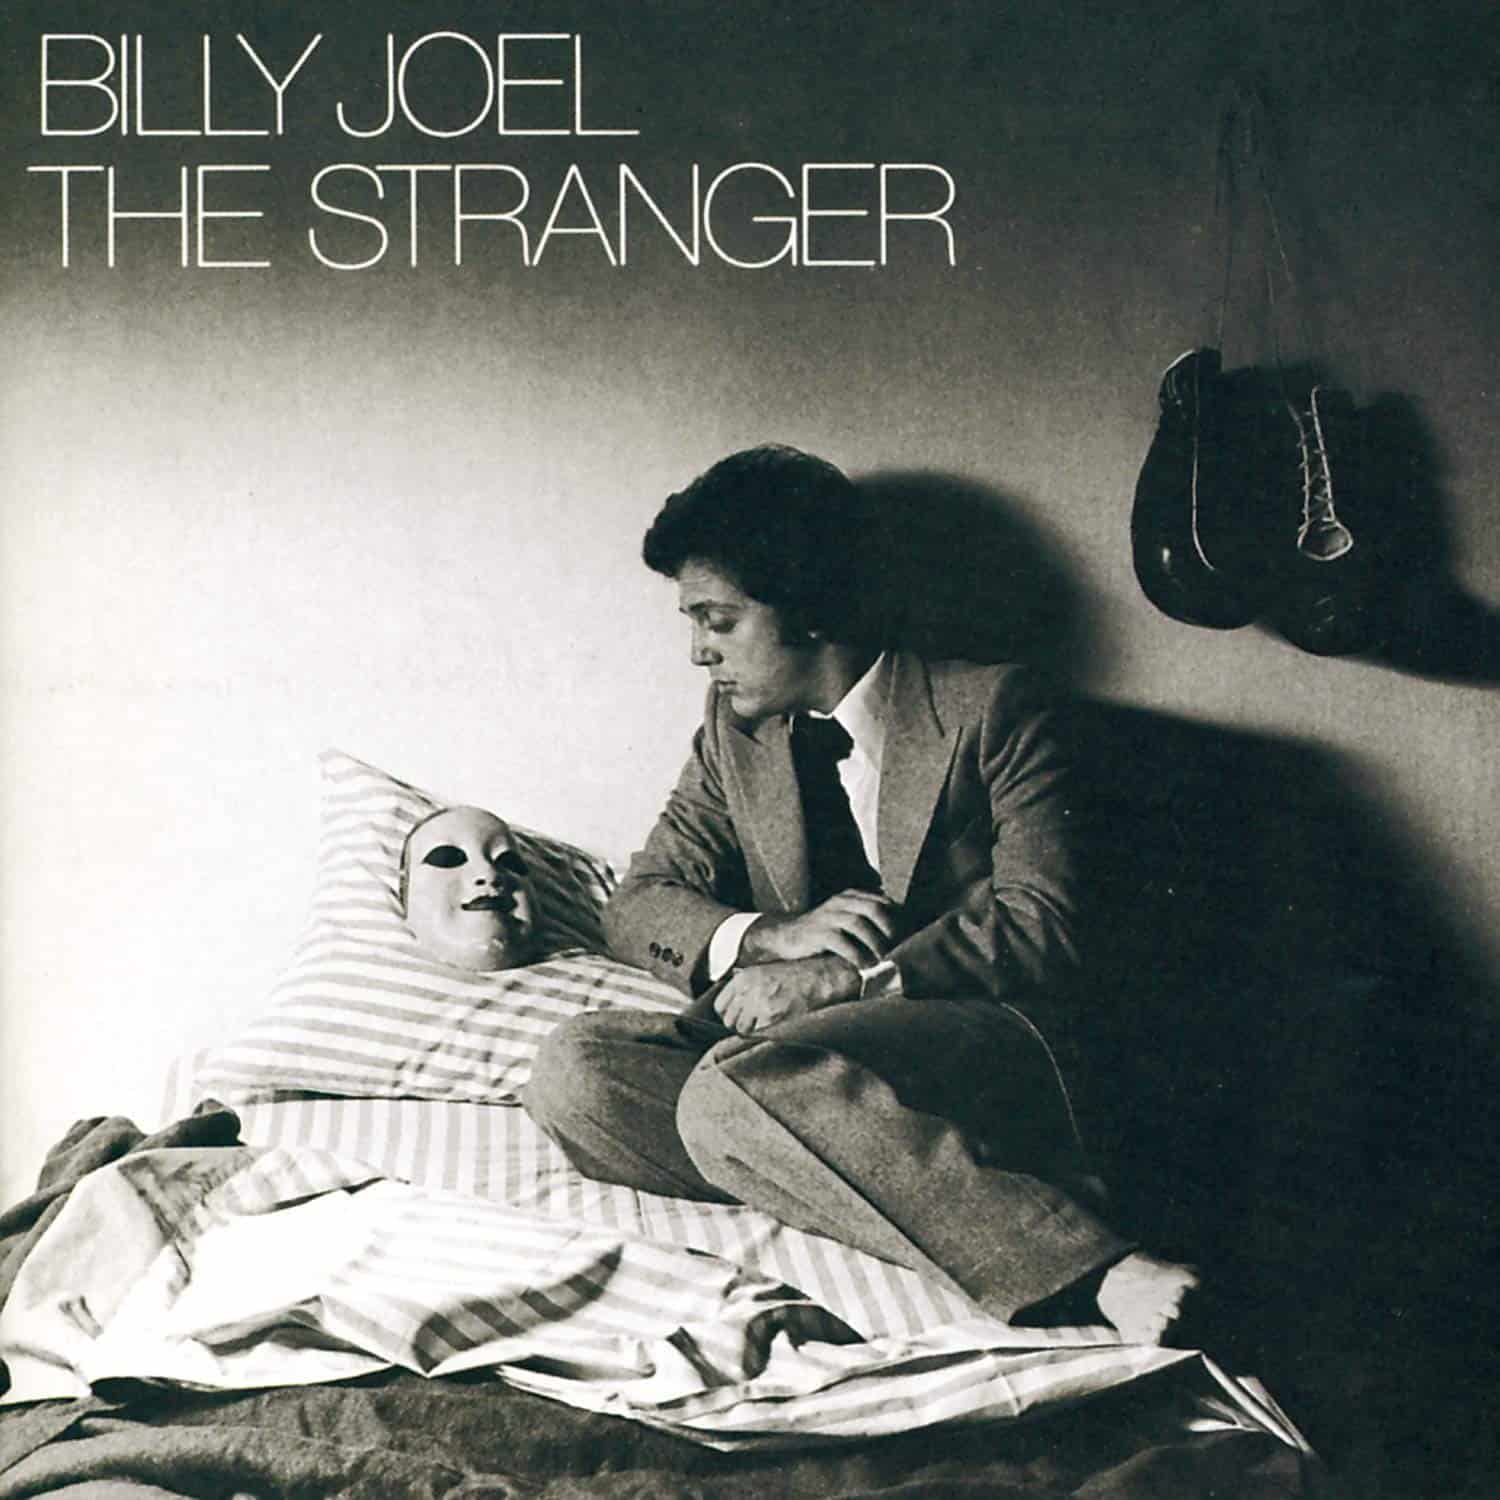 Billy-Joel-The-Stranger-vinyl-record-album-front